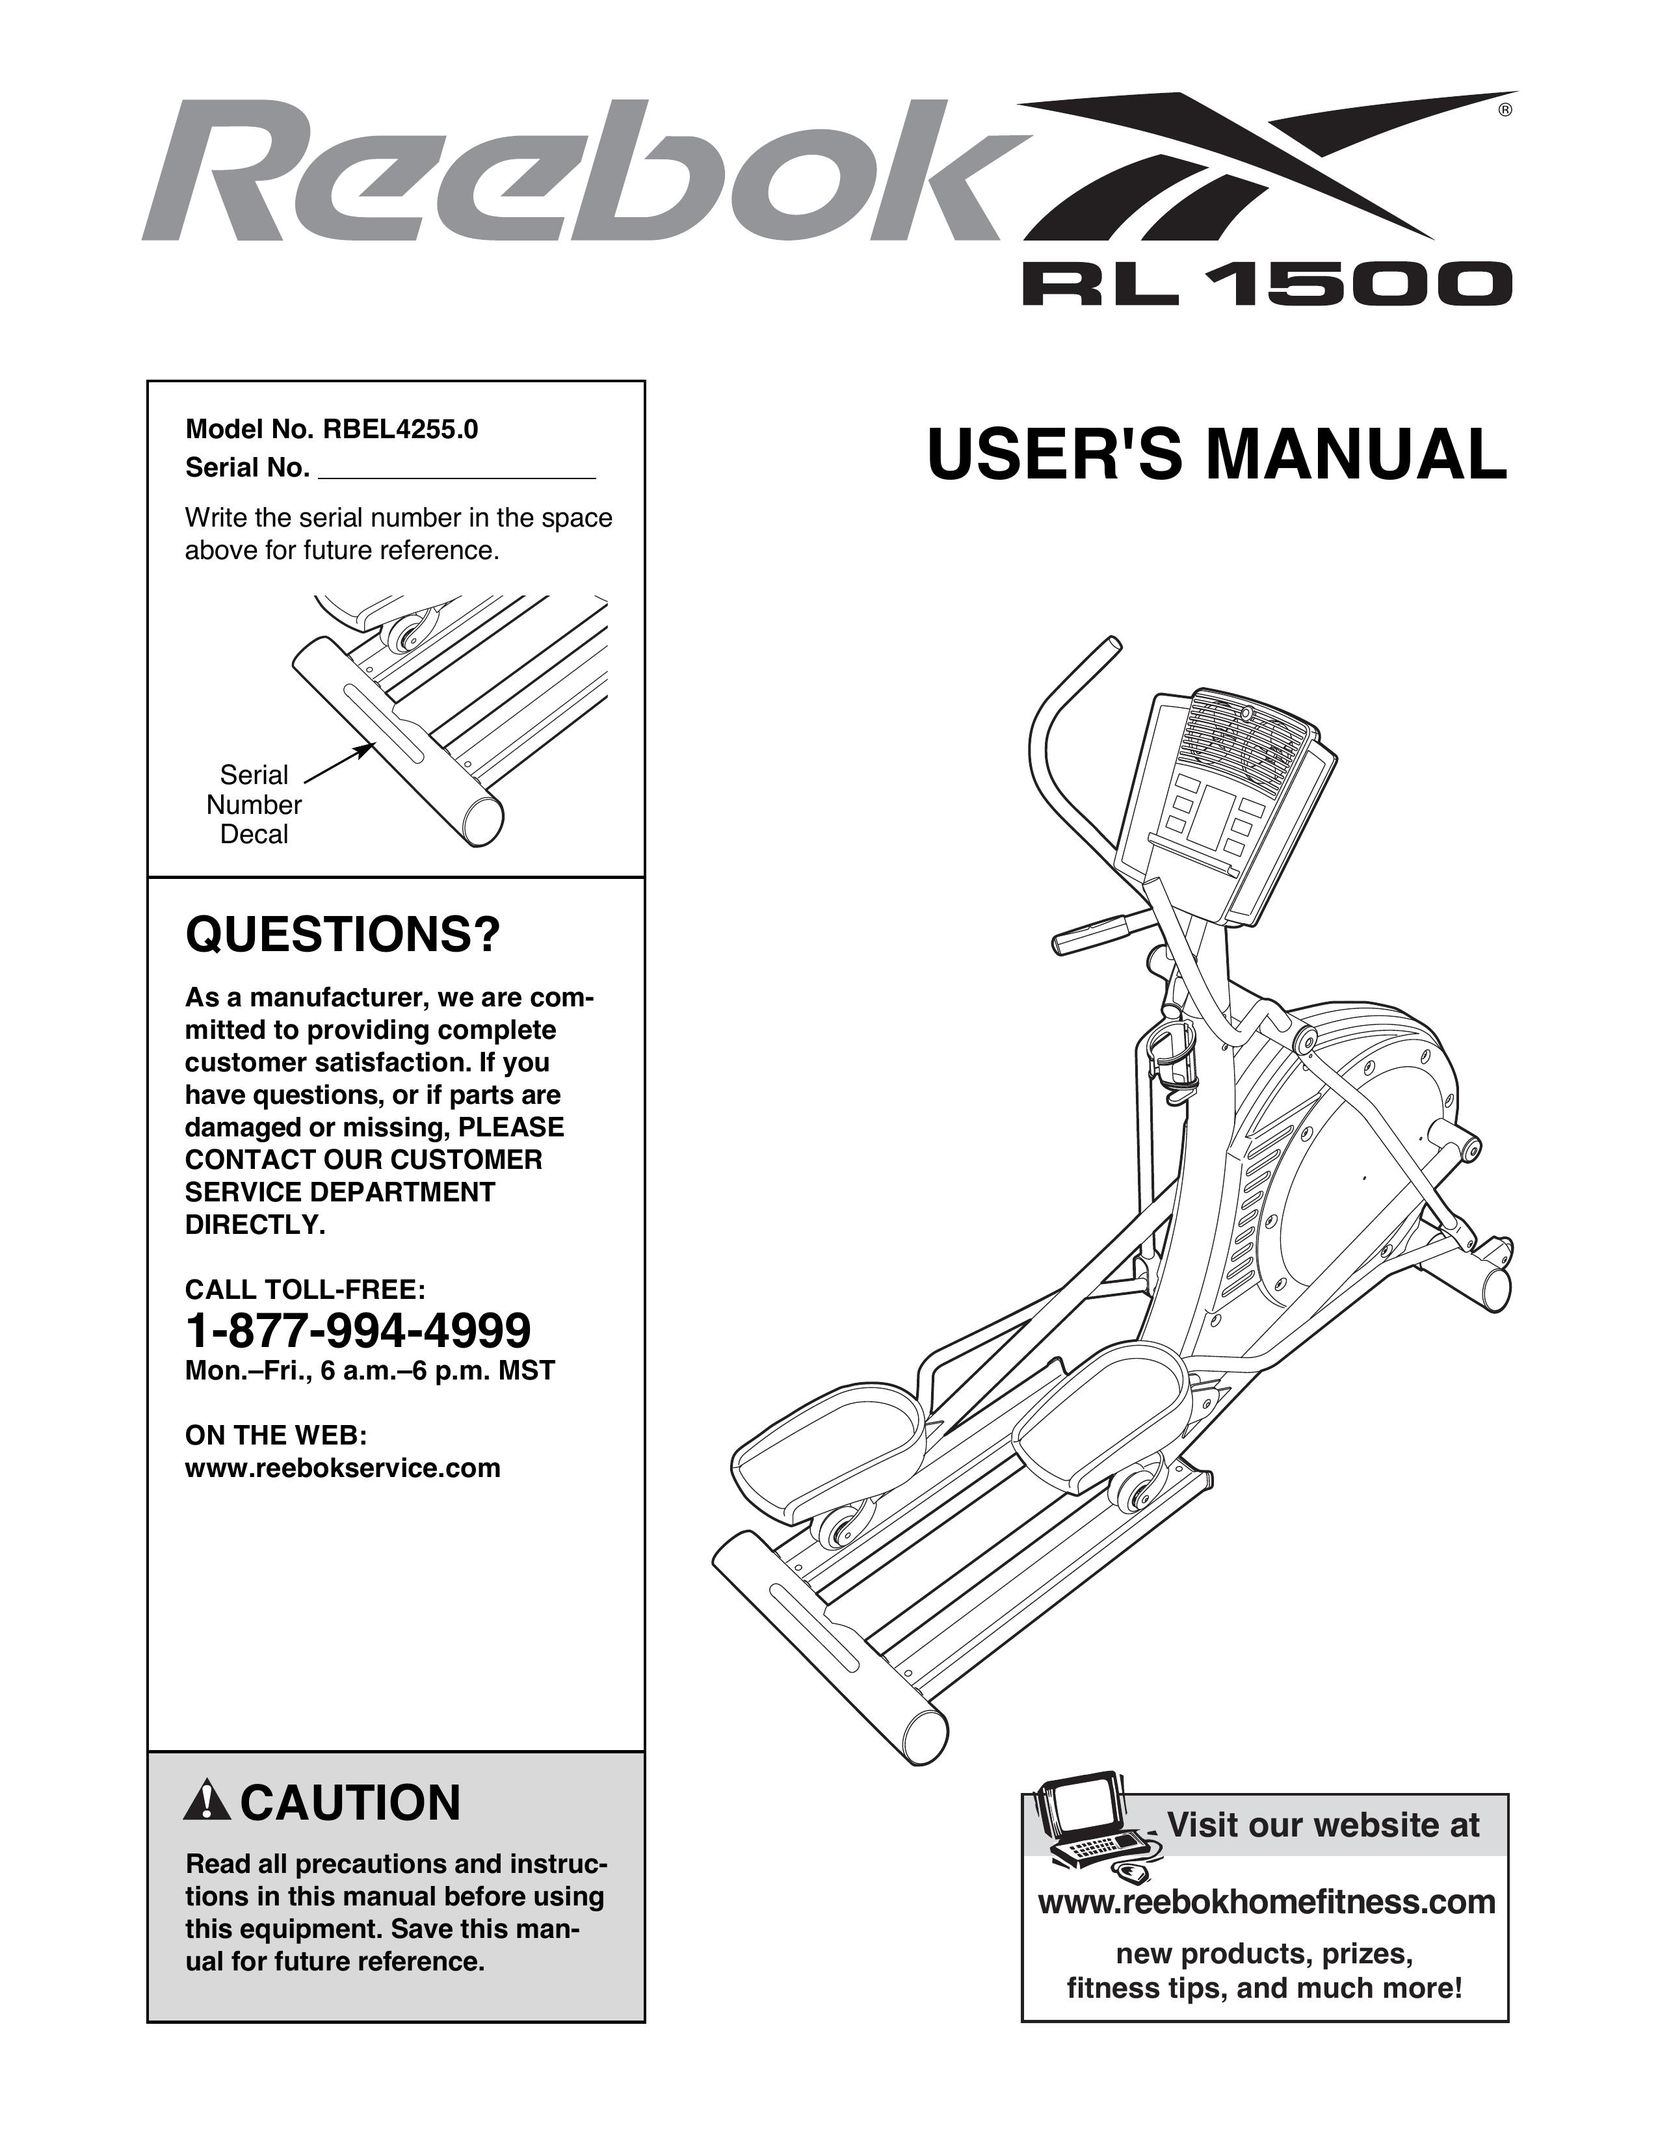 Reebok Fitness RBEL4255.0 Home Gym User Manual